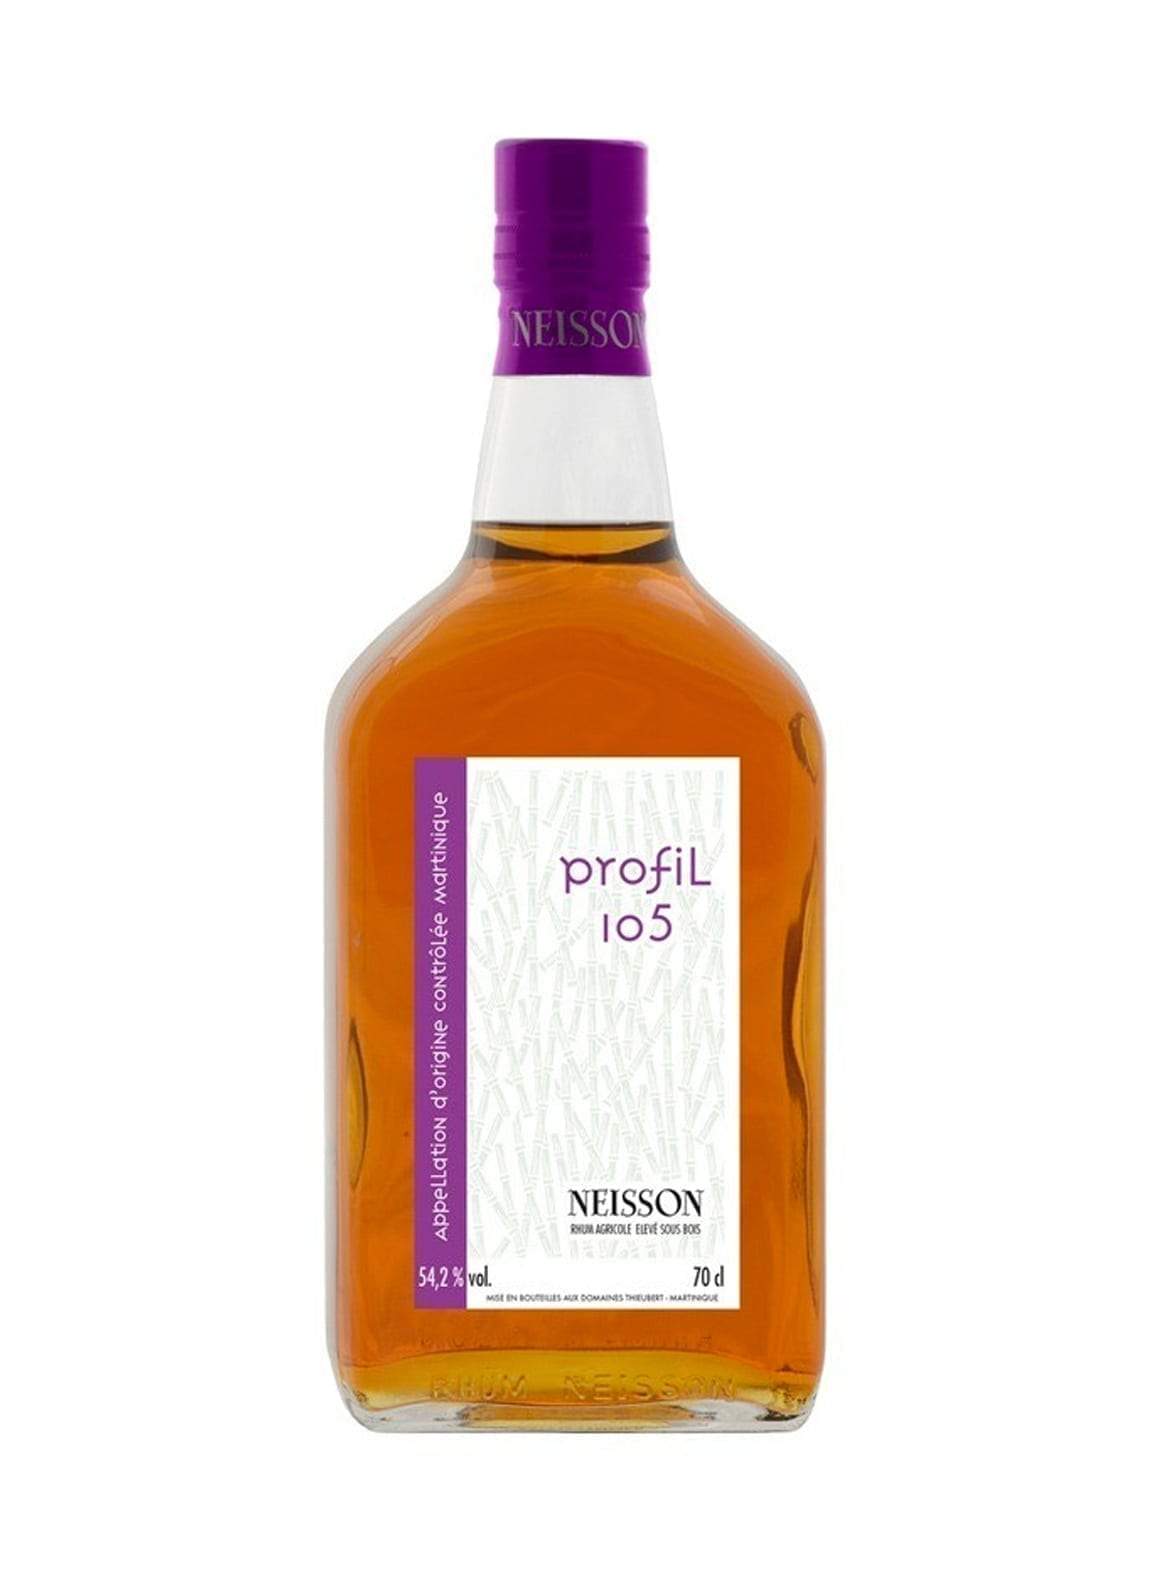 Neisson Rum Profil 105 54.2% 700ml | Rum | Shop online at Spirits of France